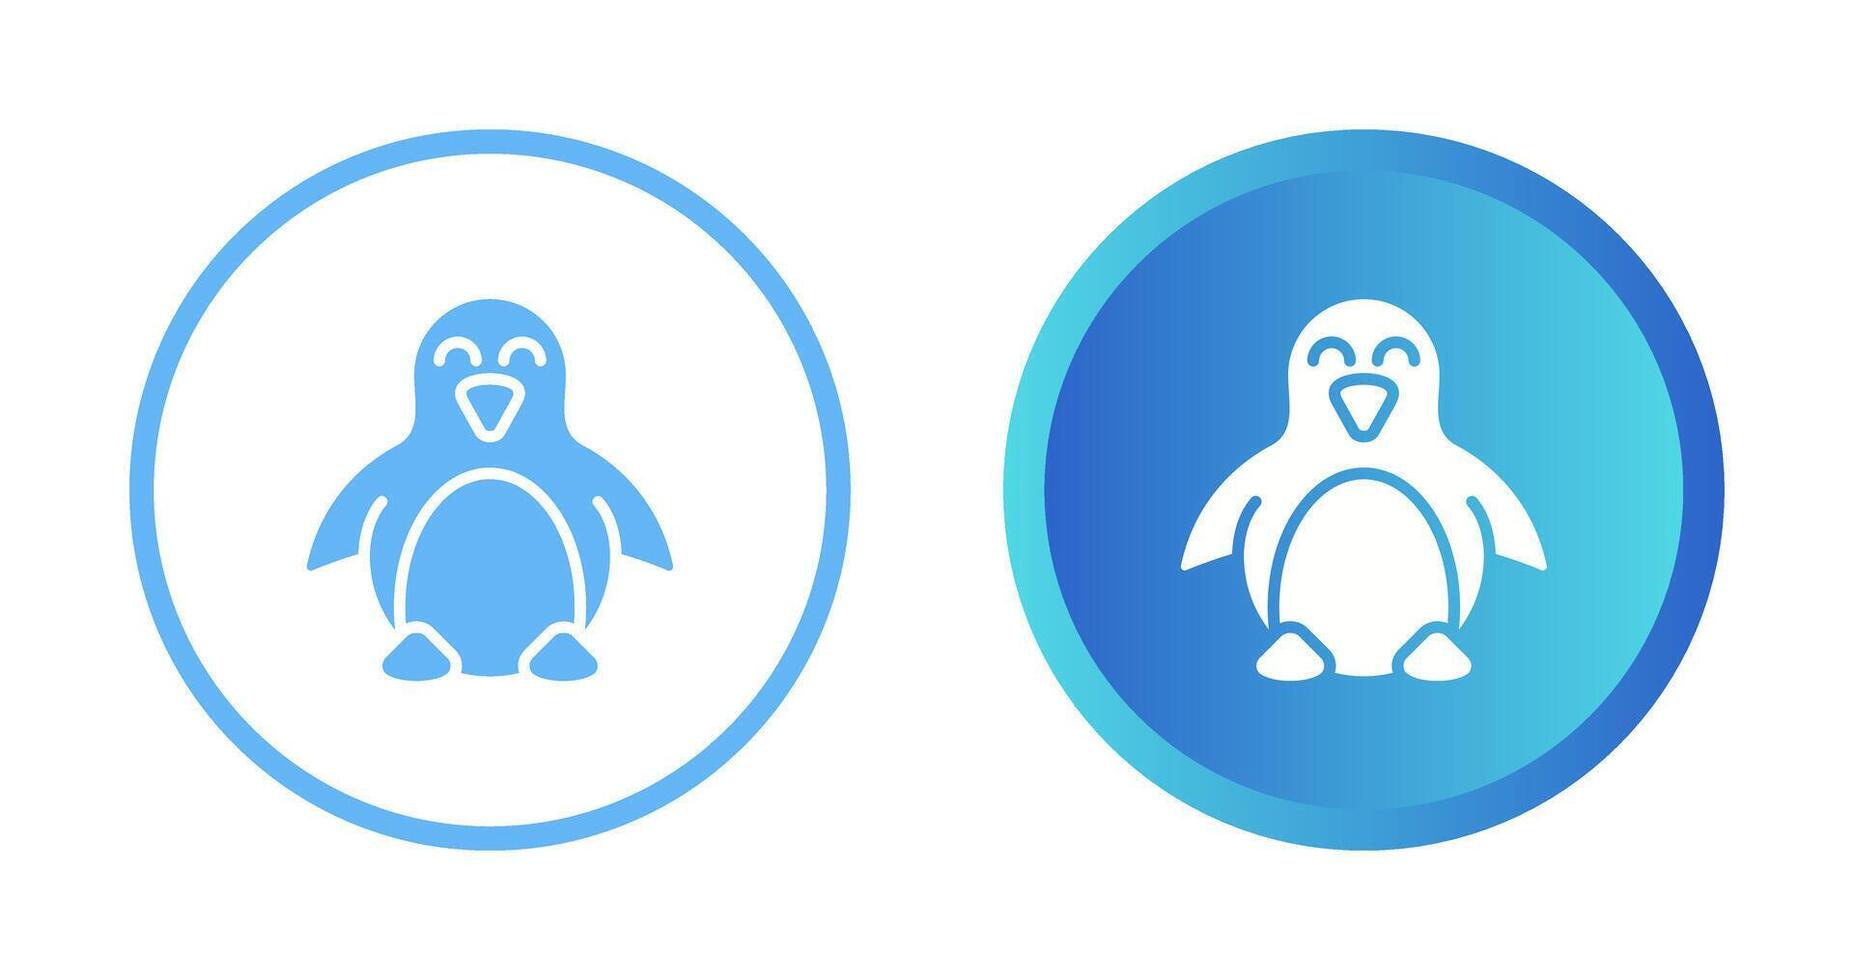 icono de vector de pingüino